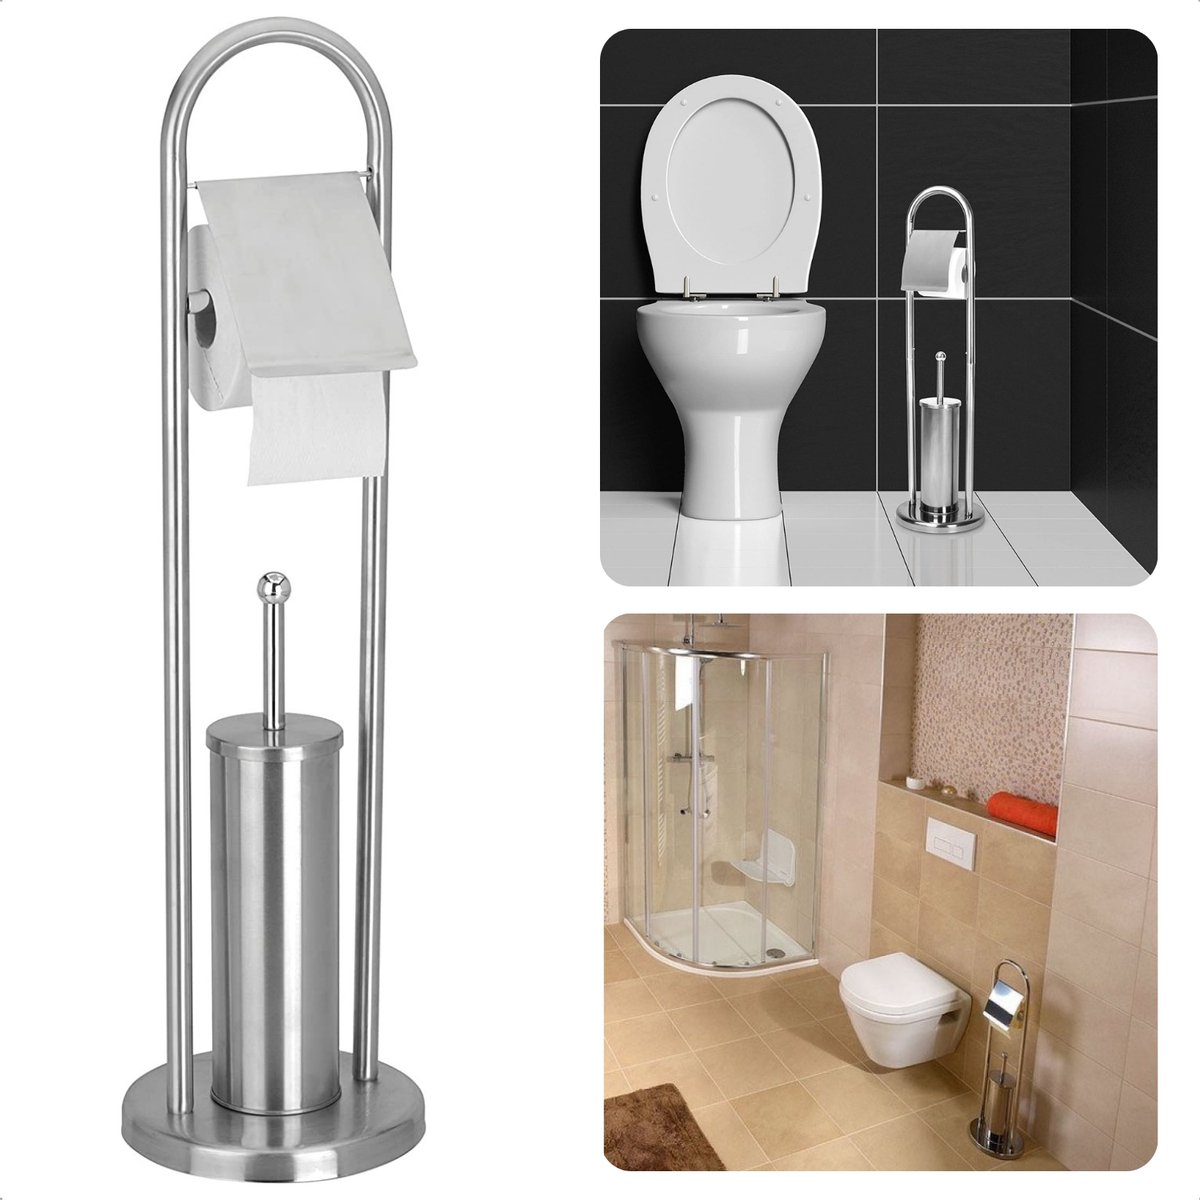 Cheqo® Toiletrolhouder met Toiletborstel - Rolhouder Staand - RVS-Glanzend - Staande Toiletset - 80cm Hoogte - Perfect voor Badkamer en Toilet